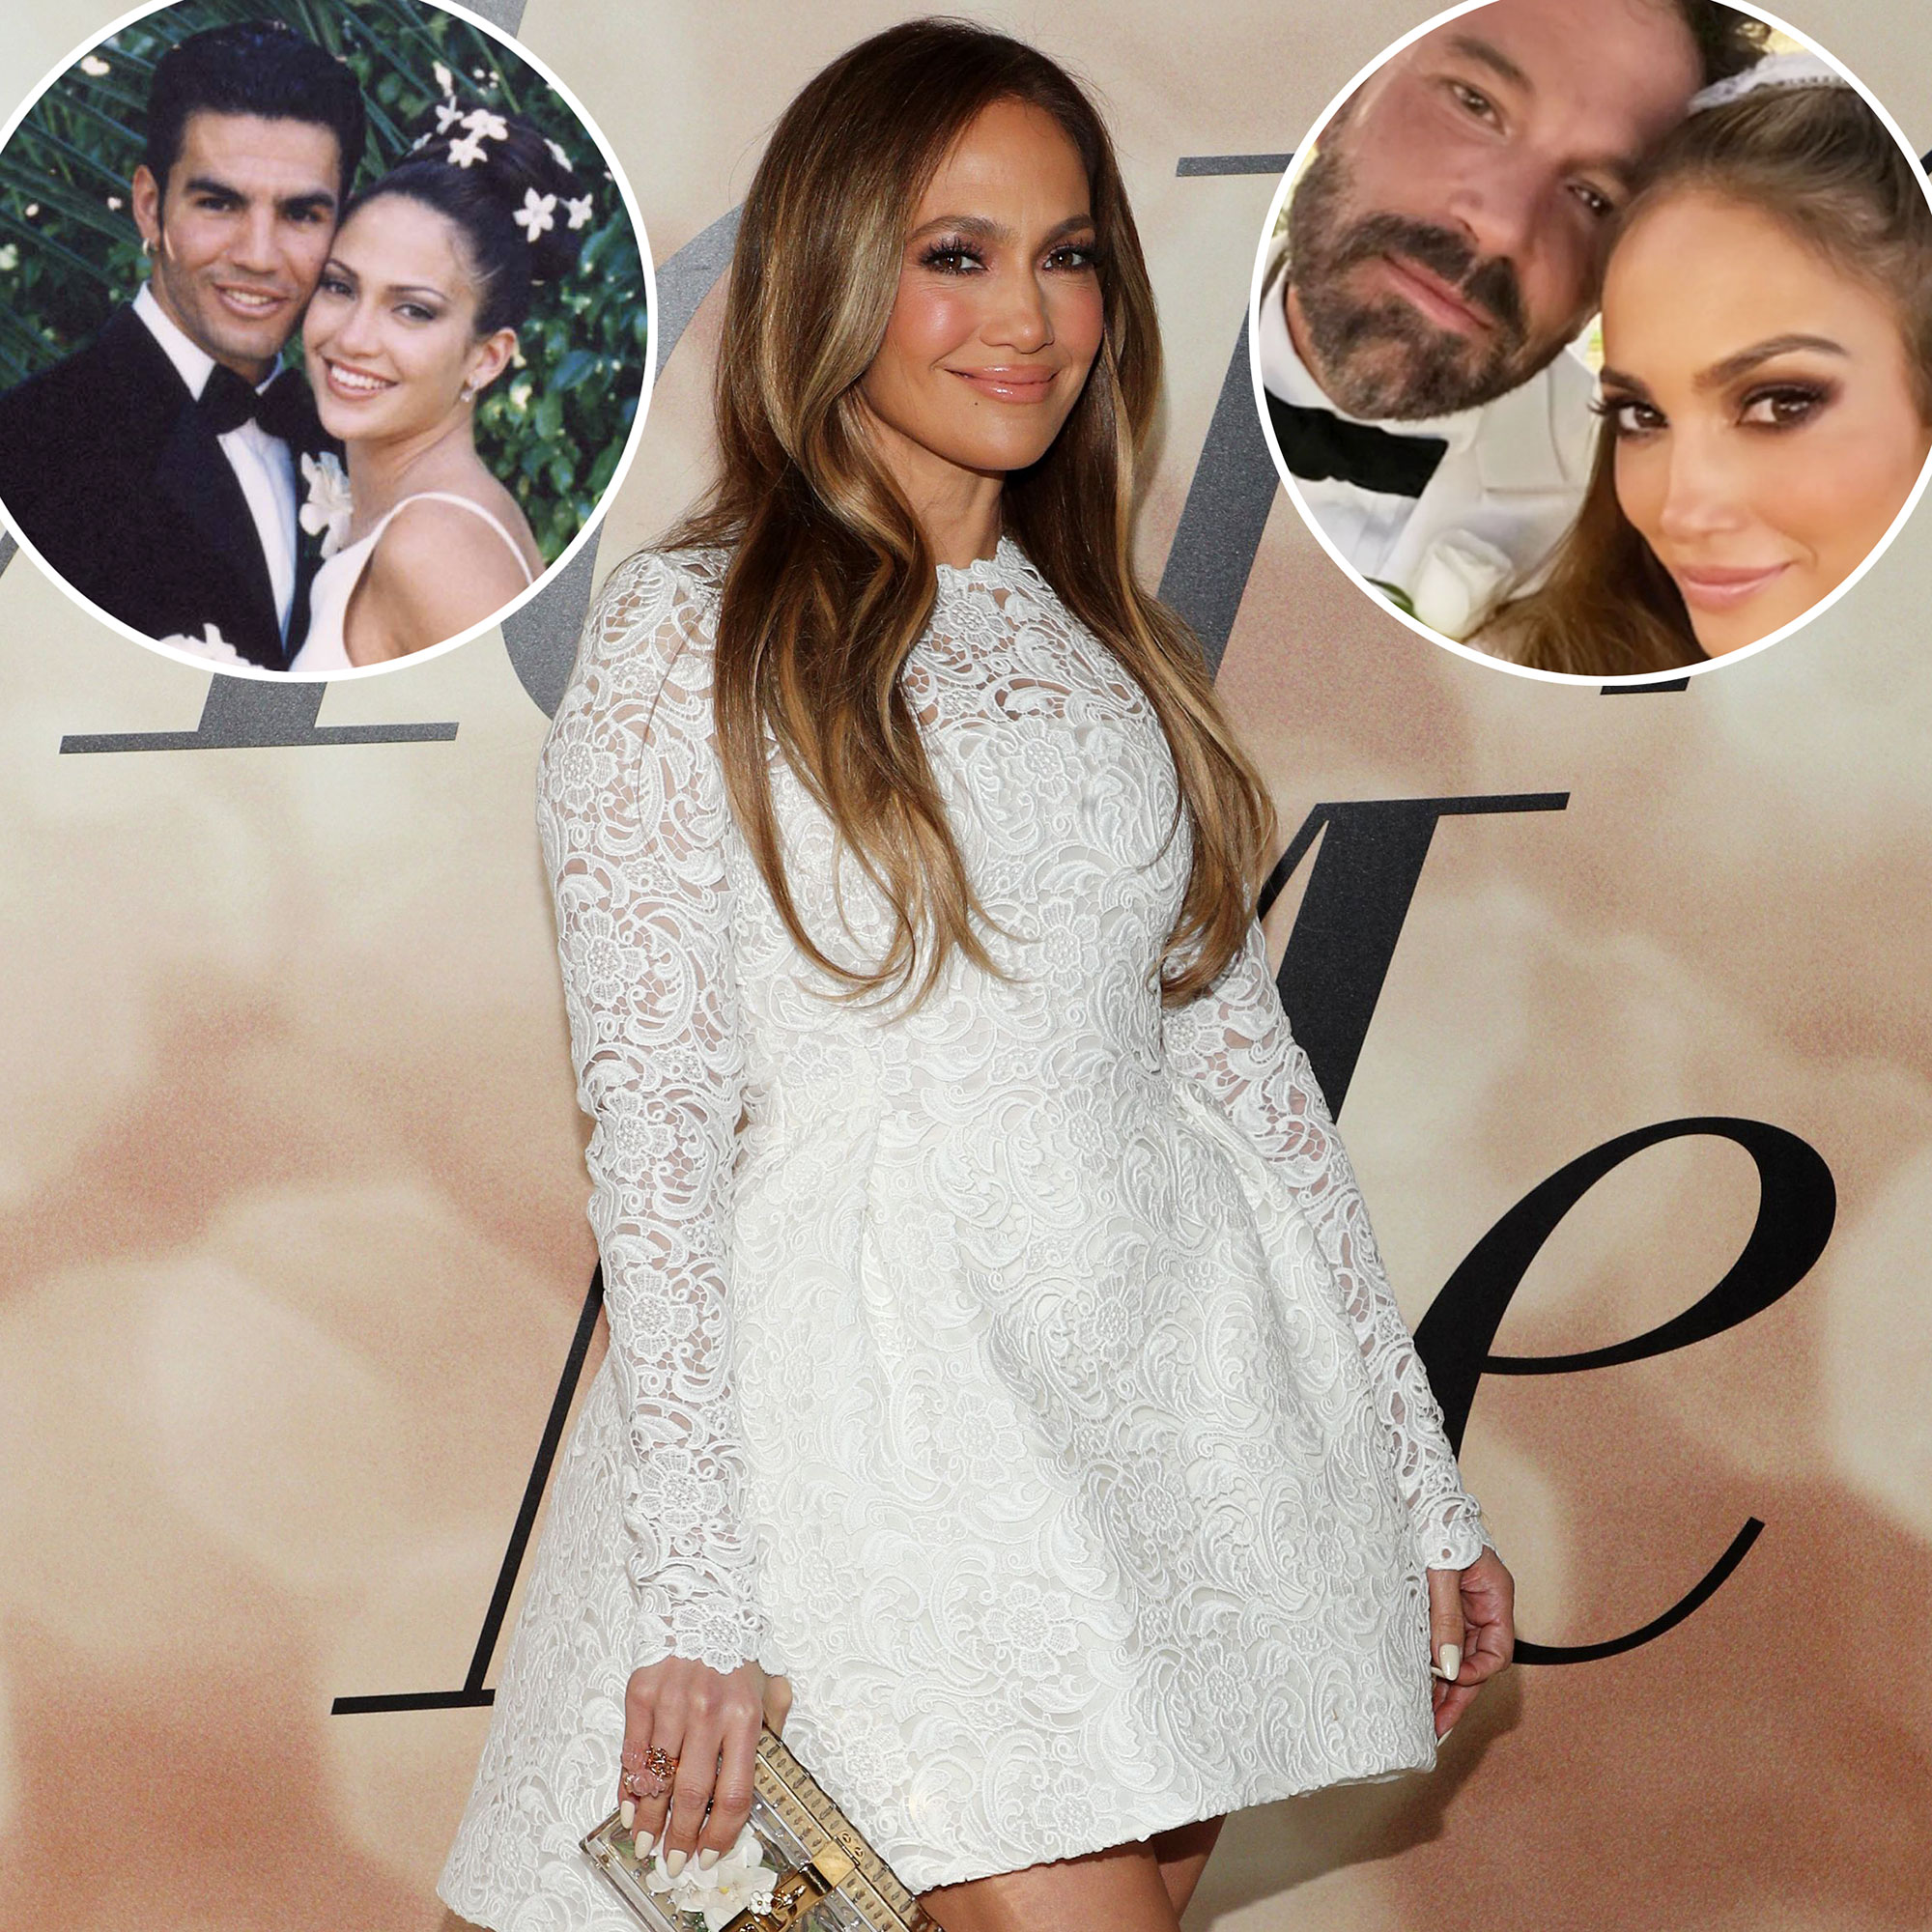 Fans Compare Jennifer Lopez's Wedding Dress to Her Wedding Planner